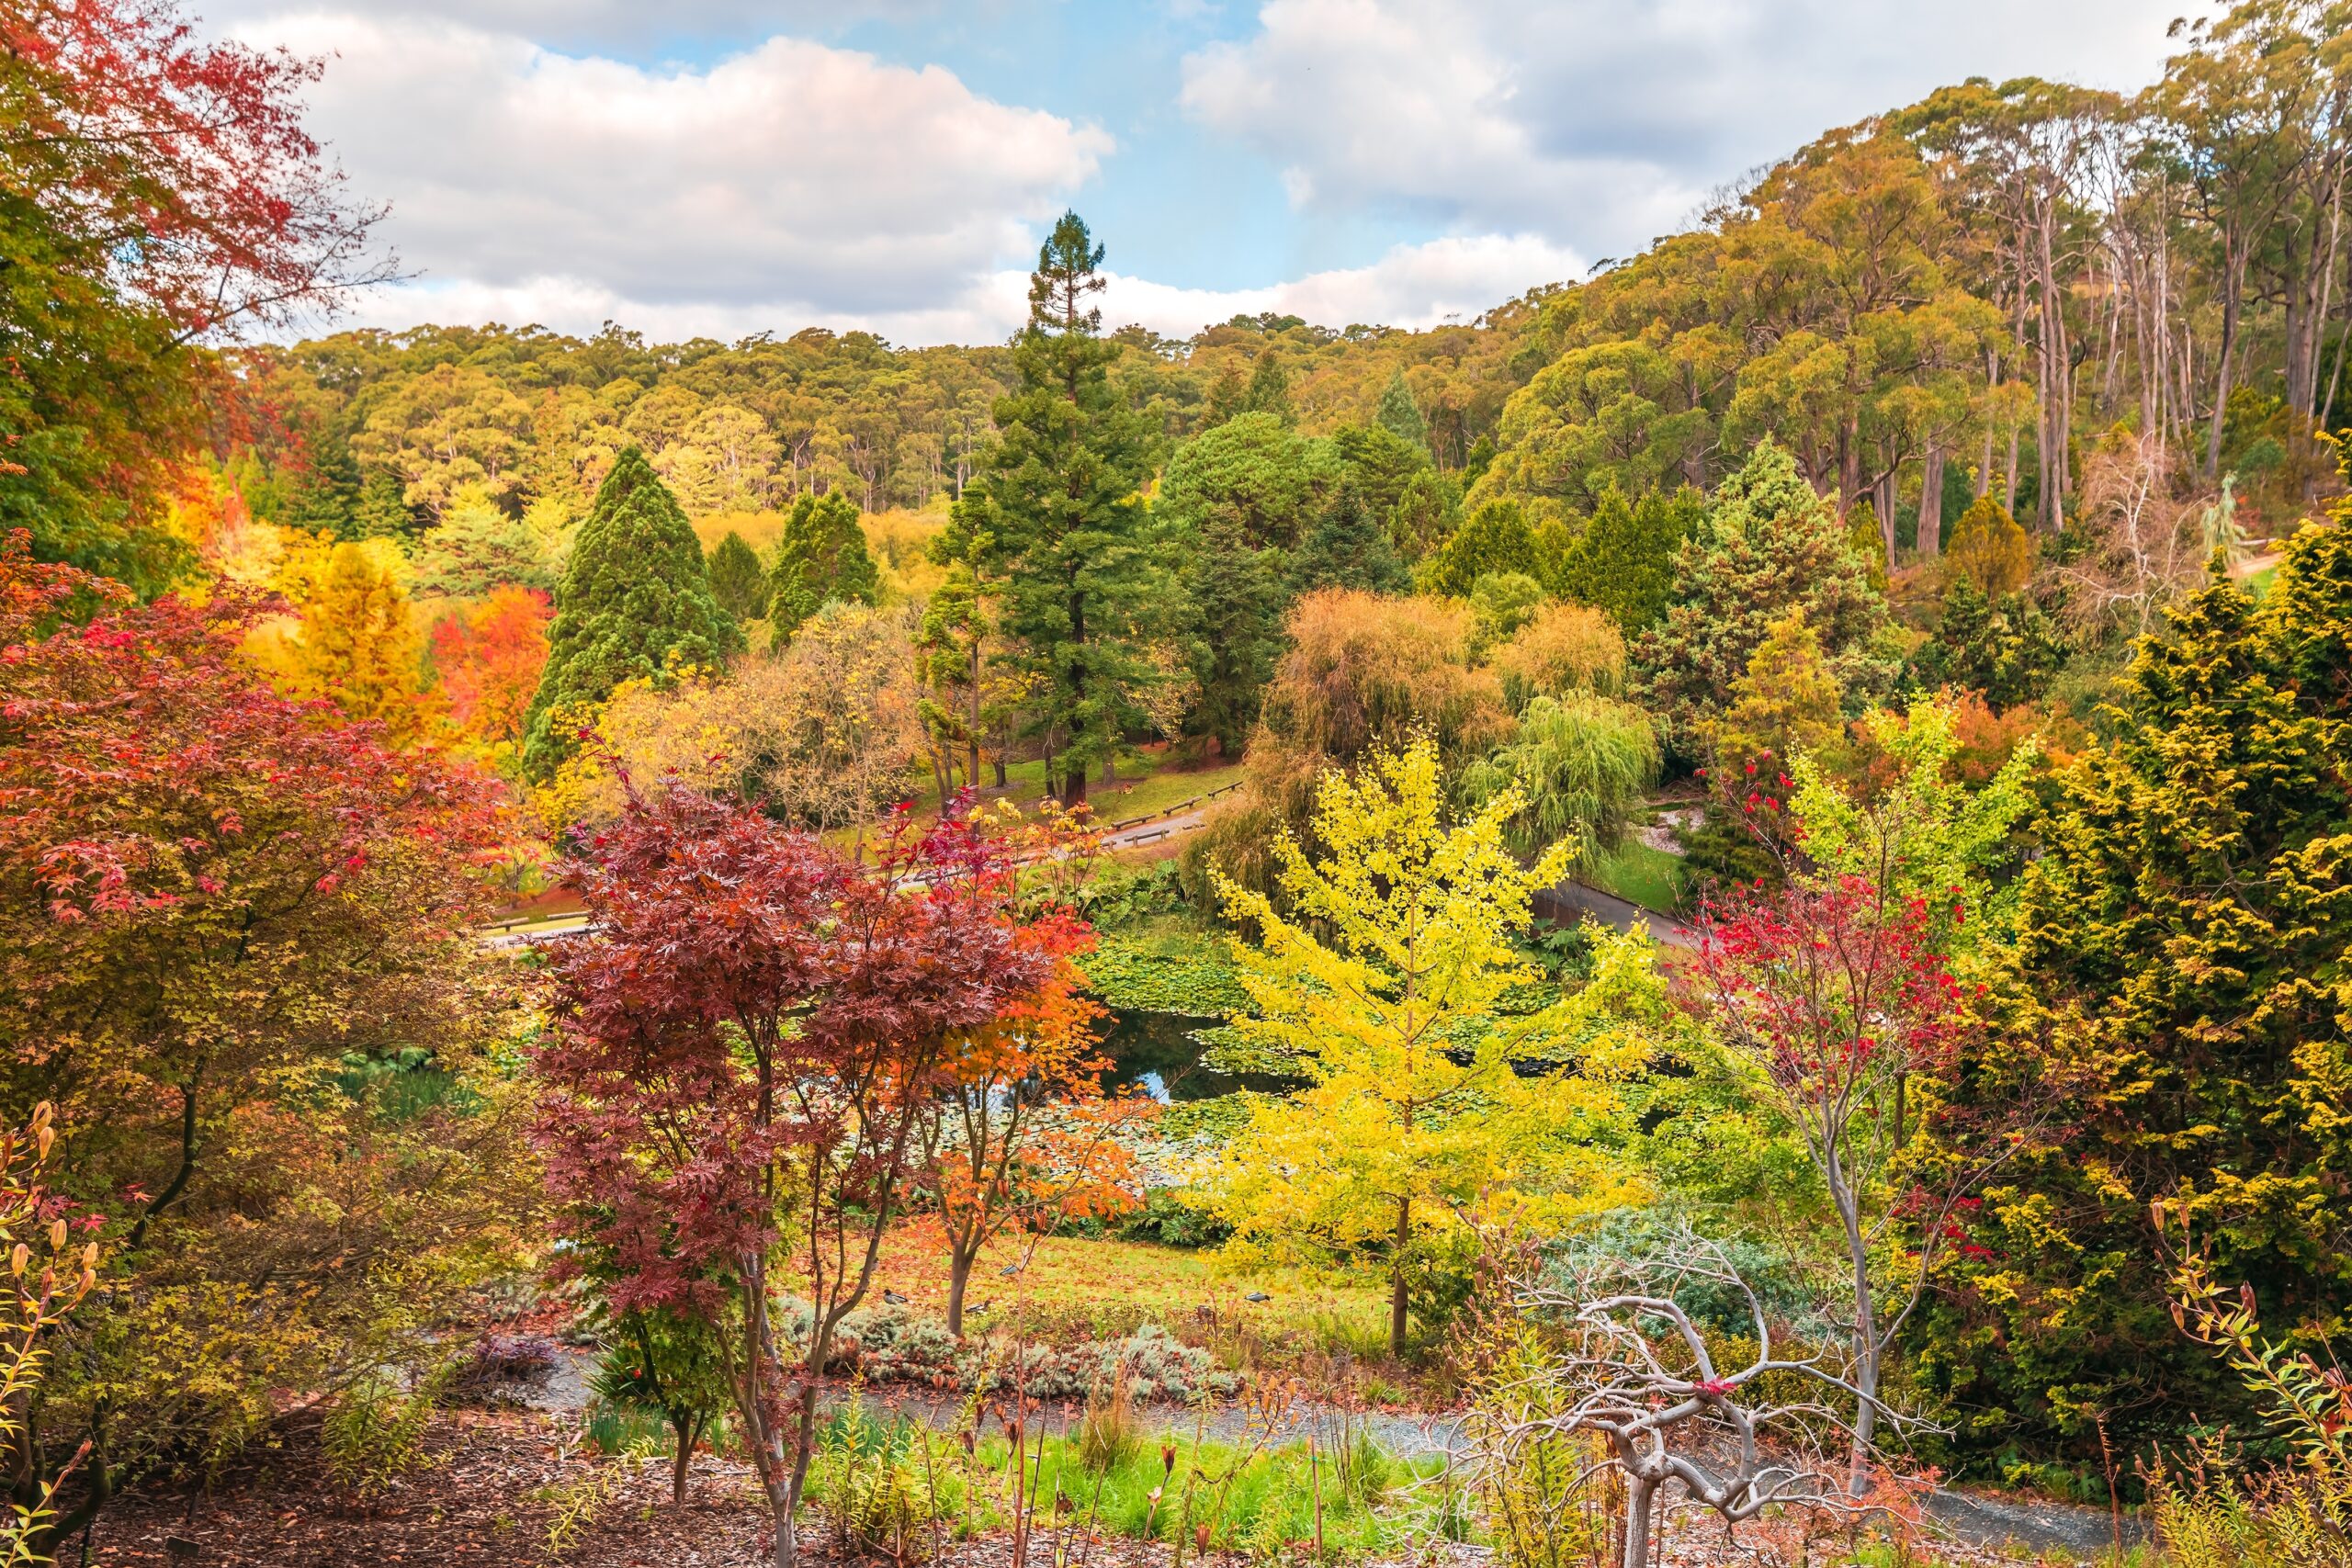 Horticulturalist View of Autumn Garden